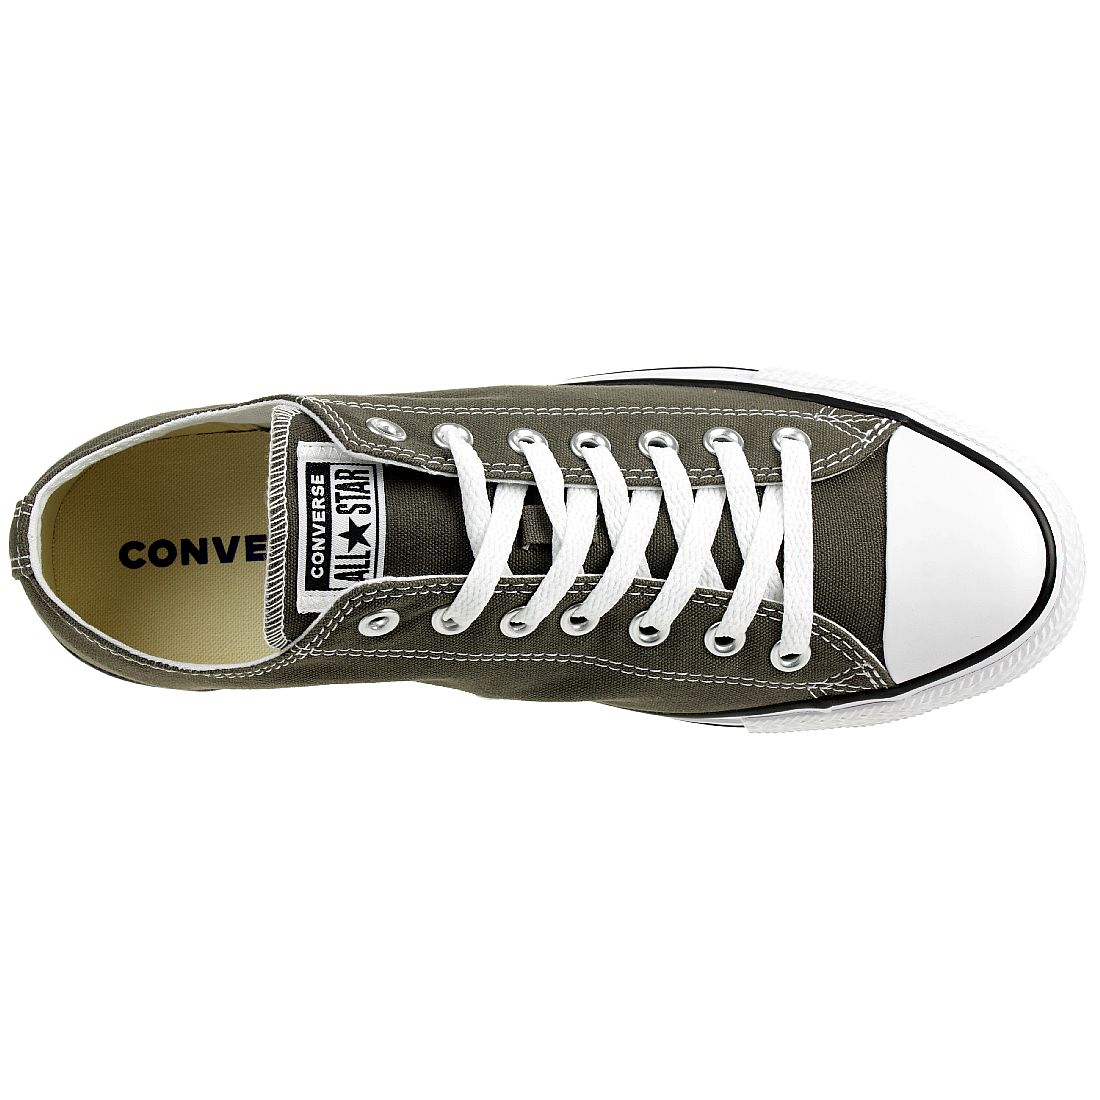 Converse C Taylor All Star SEASNL OX Chuck Schuhe Sneaker canvas grau 1J794C